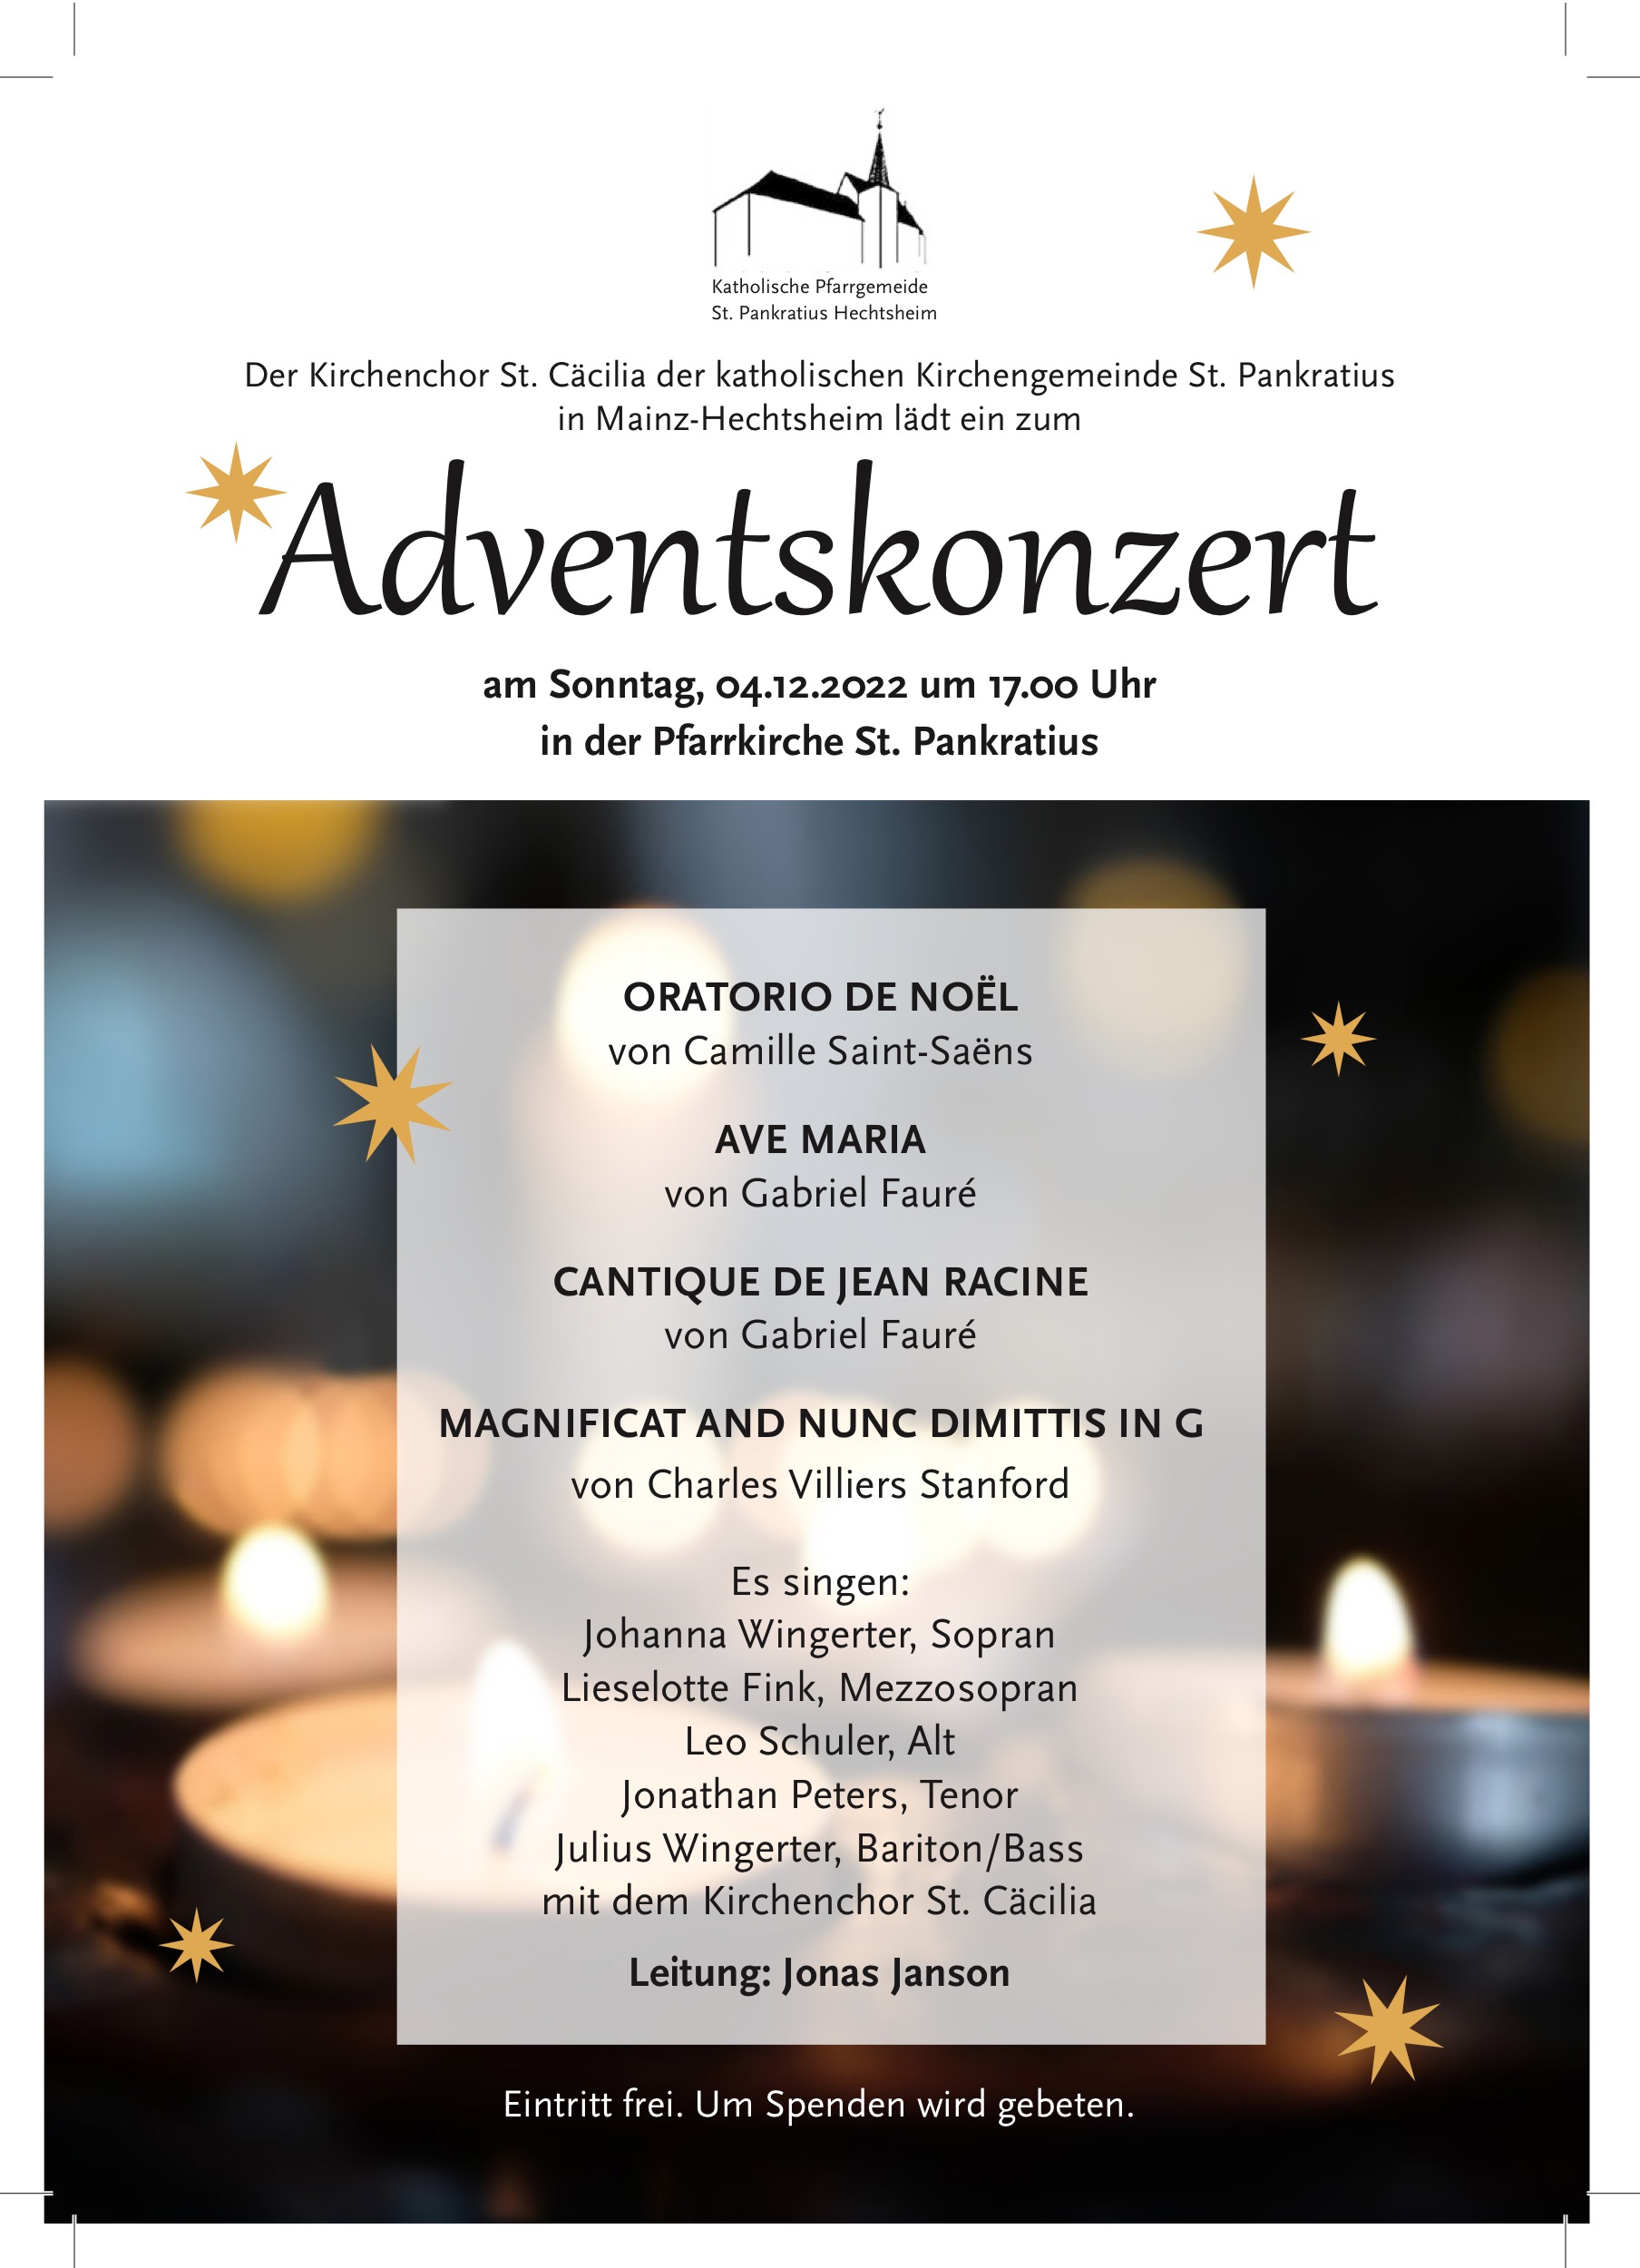 Adventskonzert 2022 (c) Chor St. Cäcilia